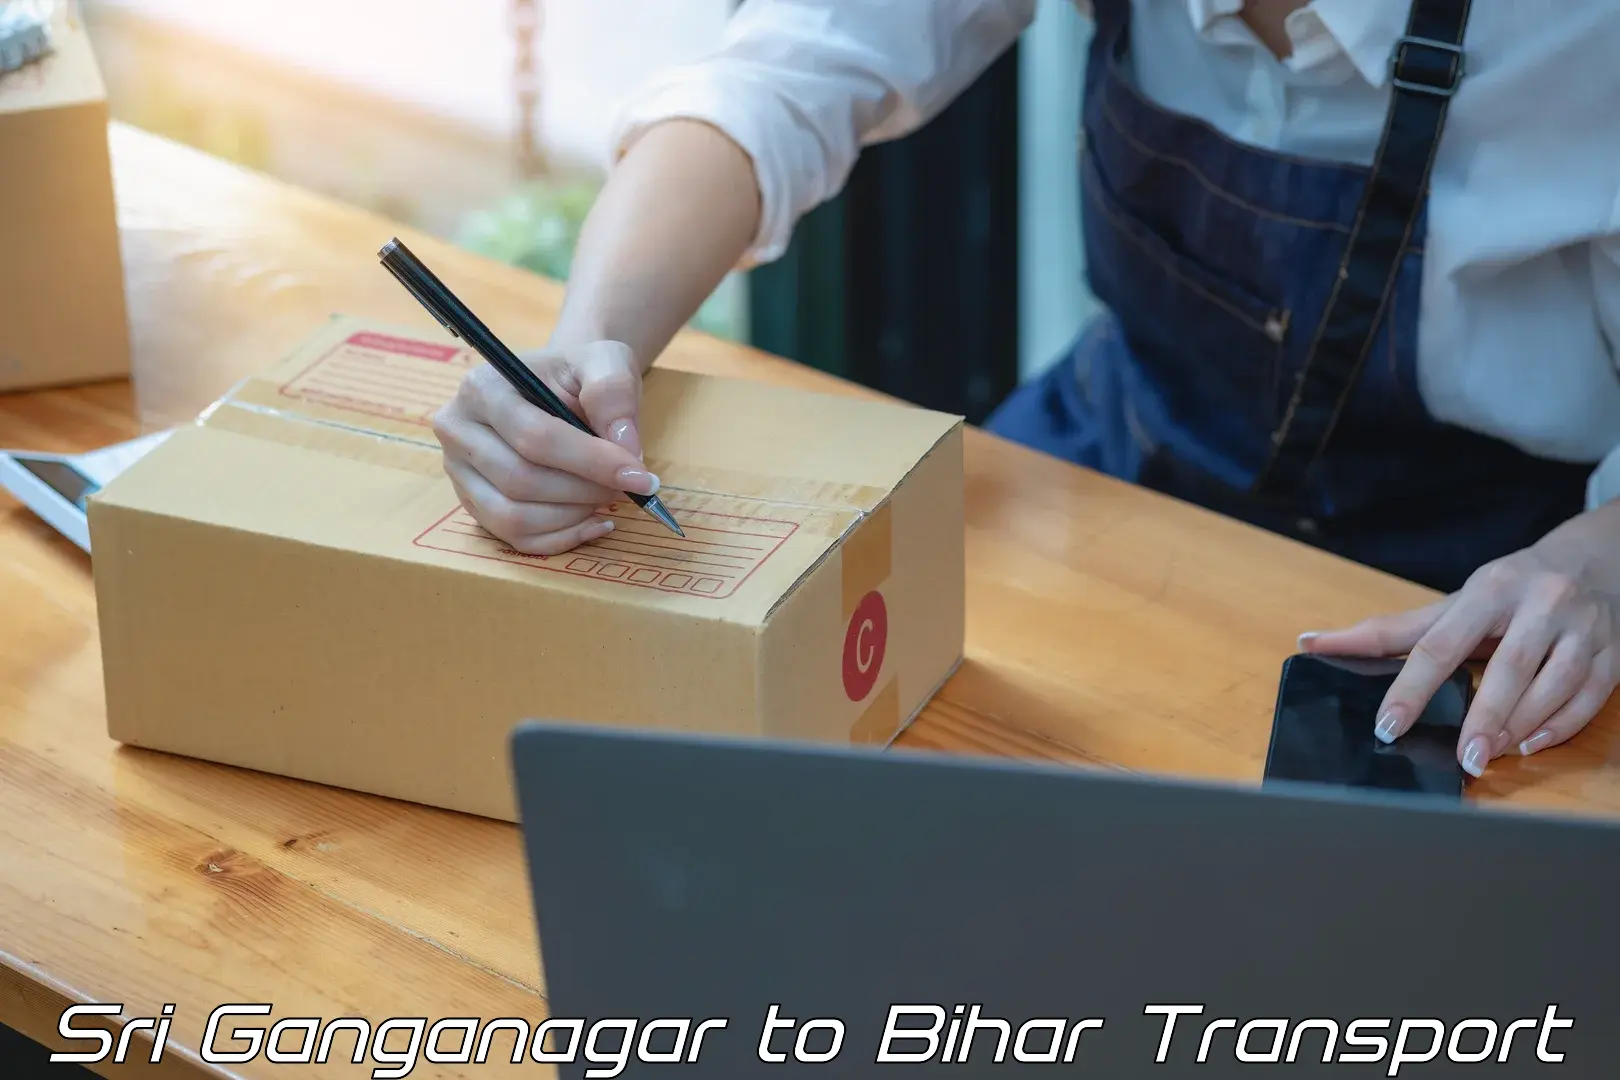 Transport in sharing in Sri Ganganagar to Bihar